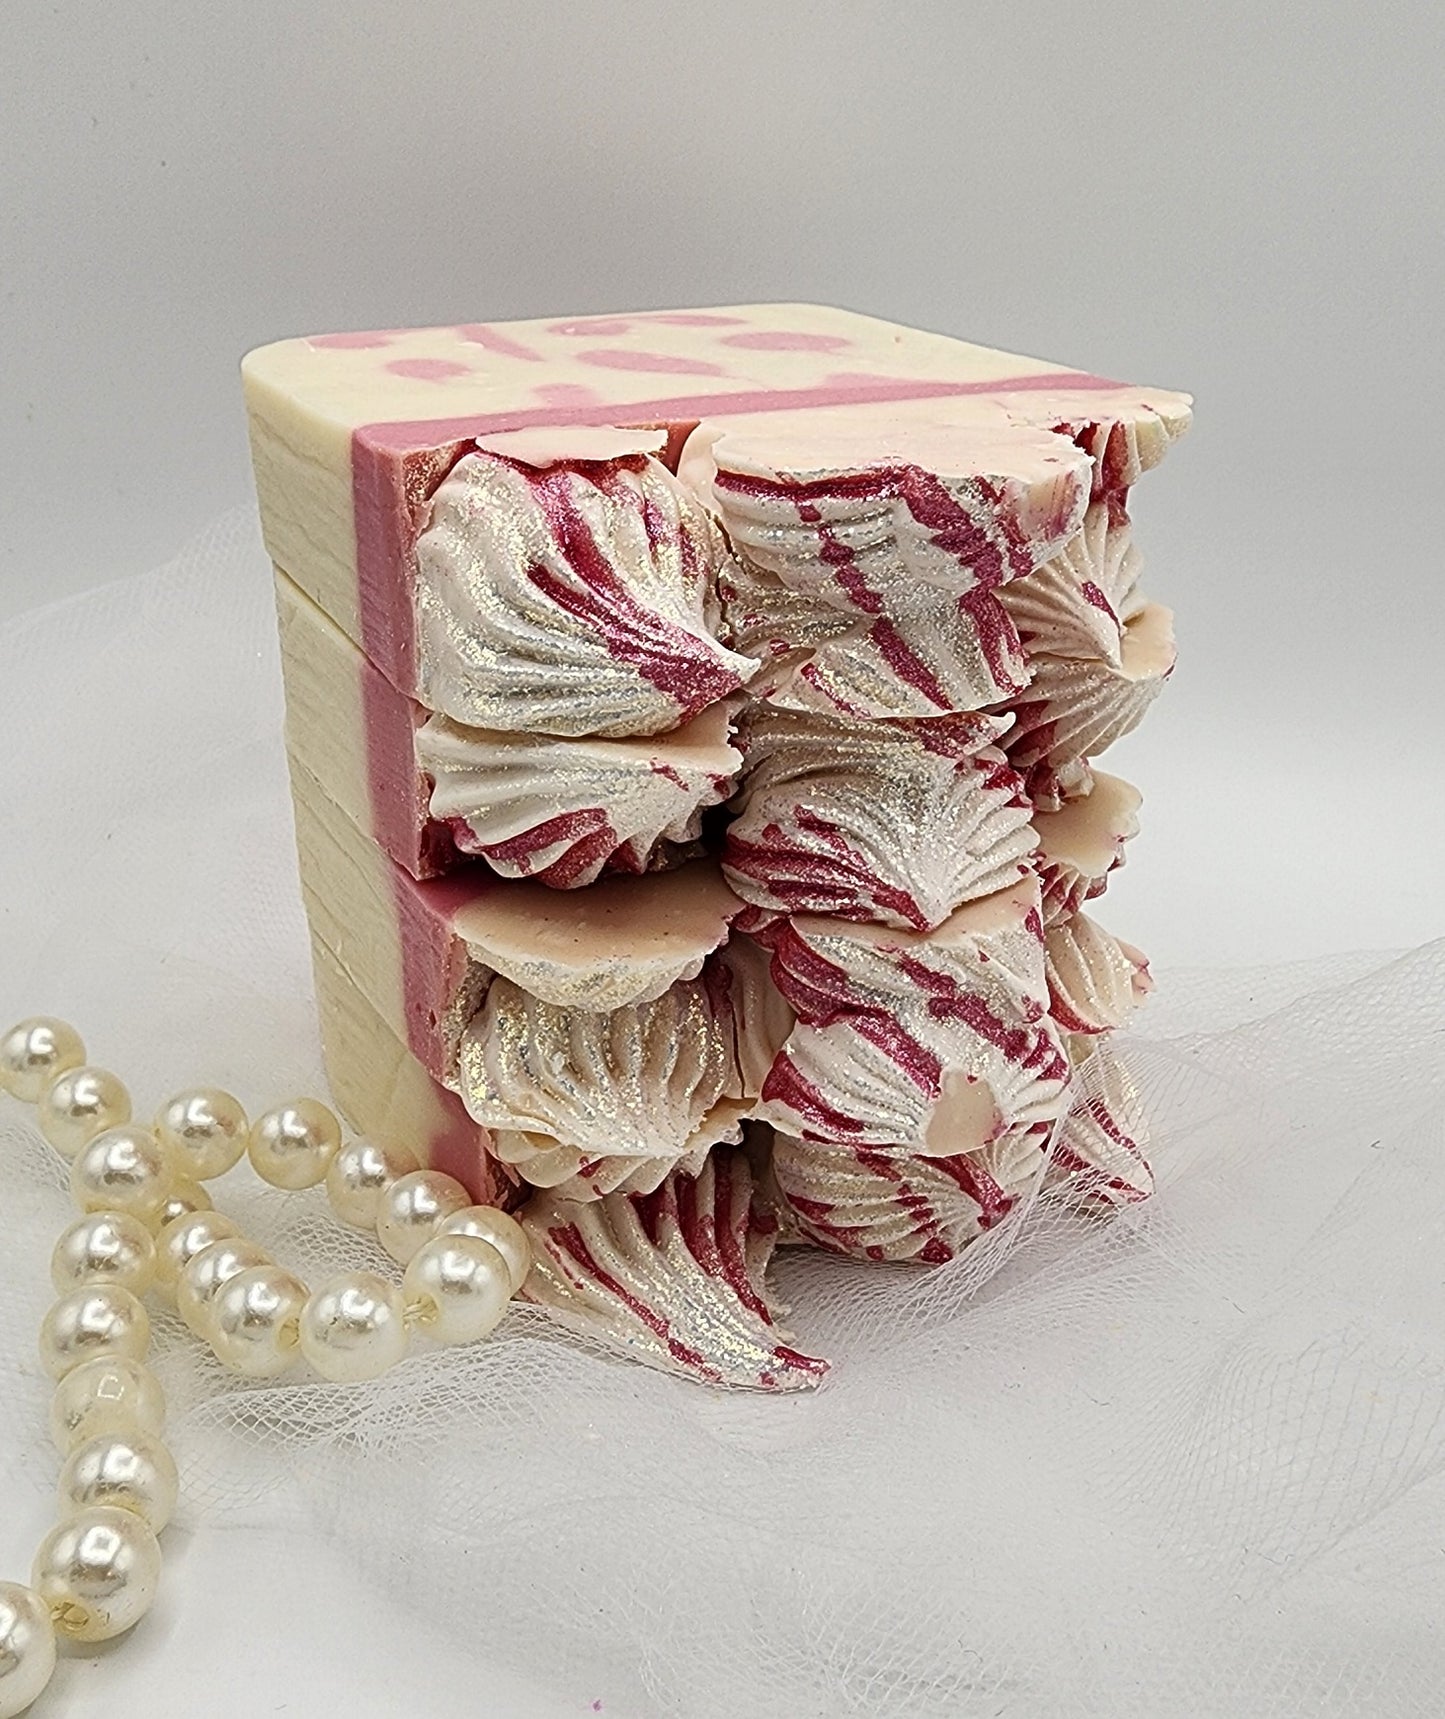 Mrs. Darcy / Women's Bar Soap / Gift Soap / Gift Idea / Handmade Soap / Cold Process Soap